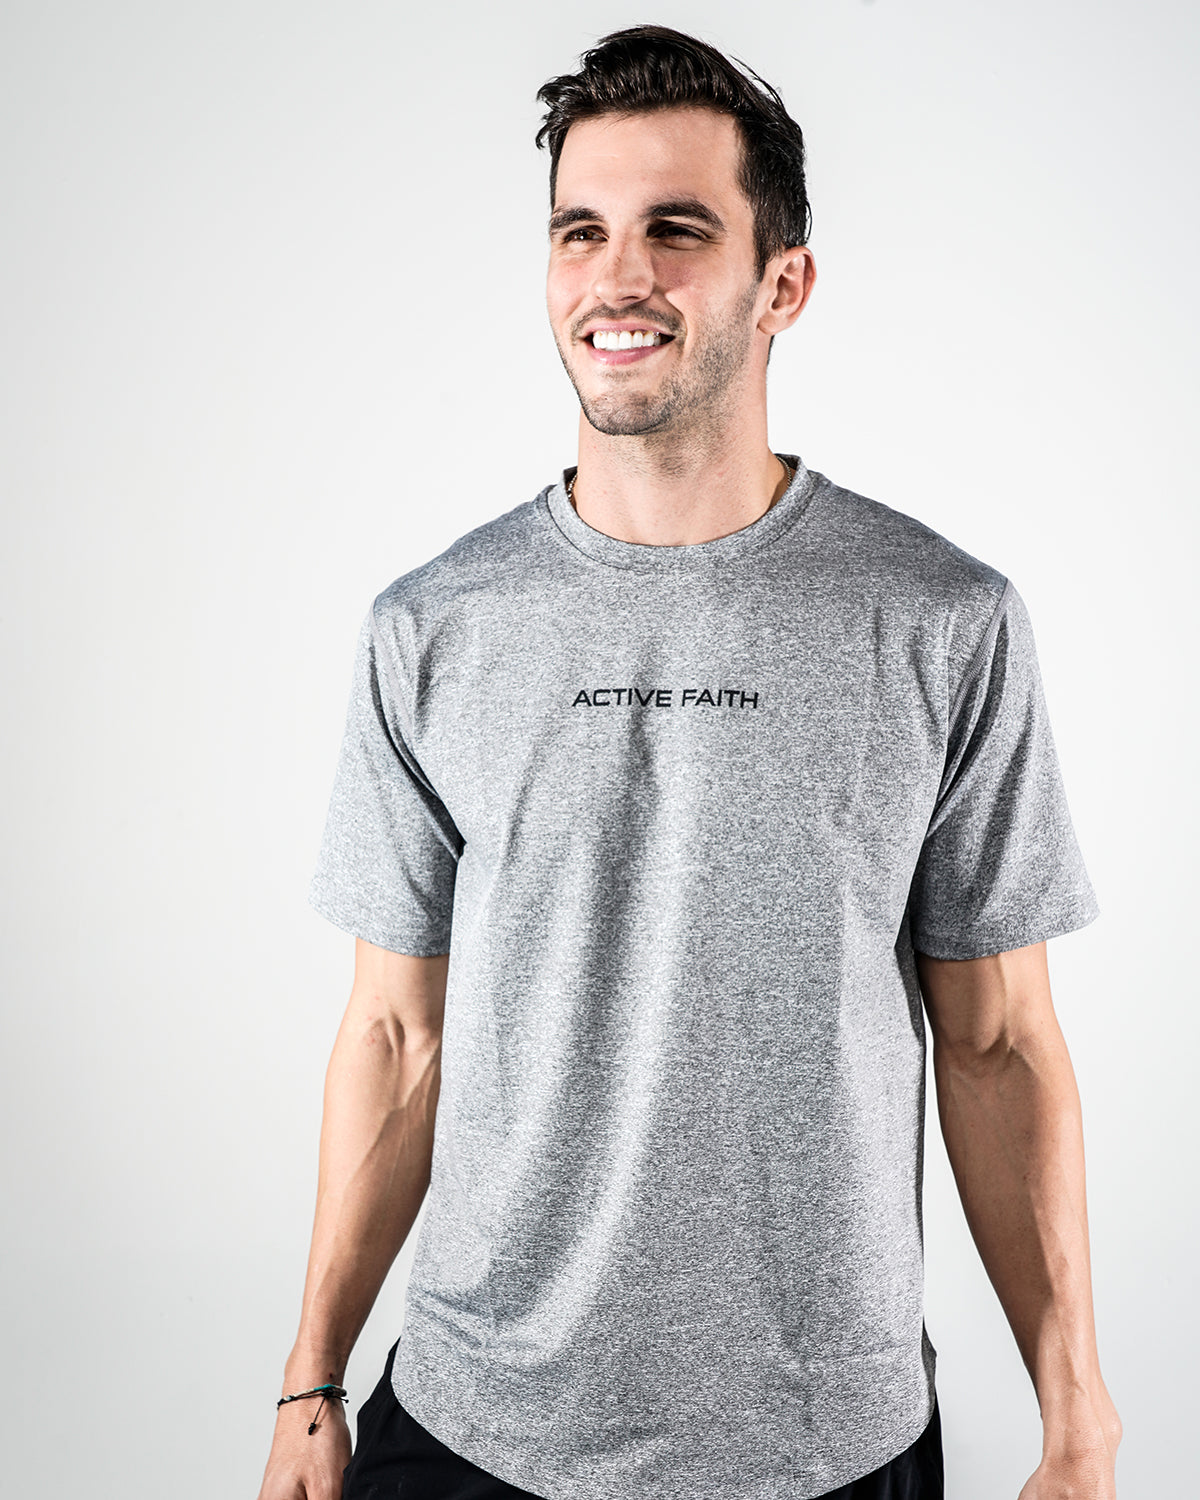 Men's Active Faith T-Shirt In Grey Color